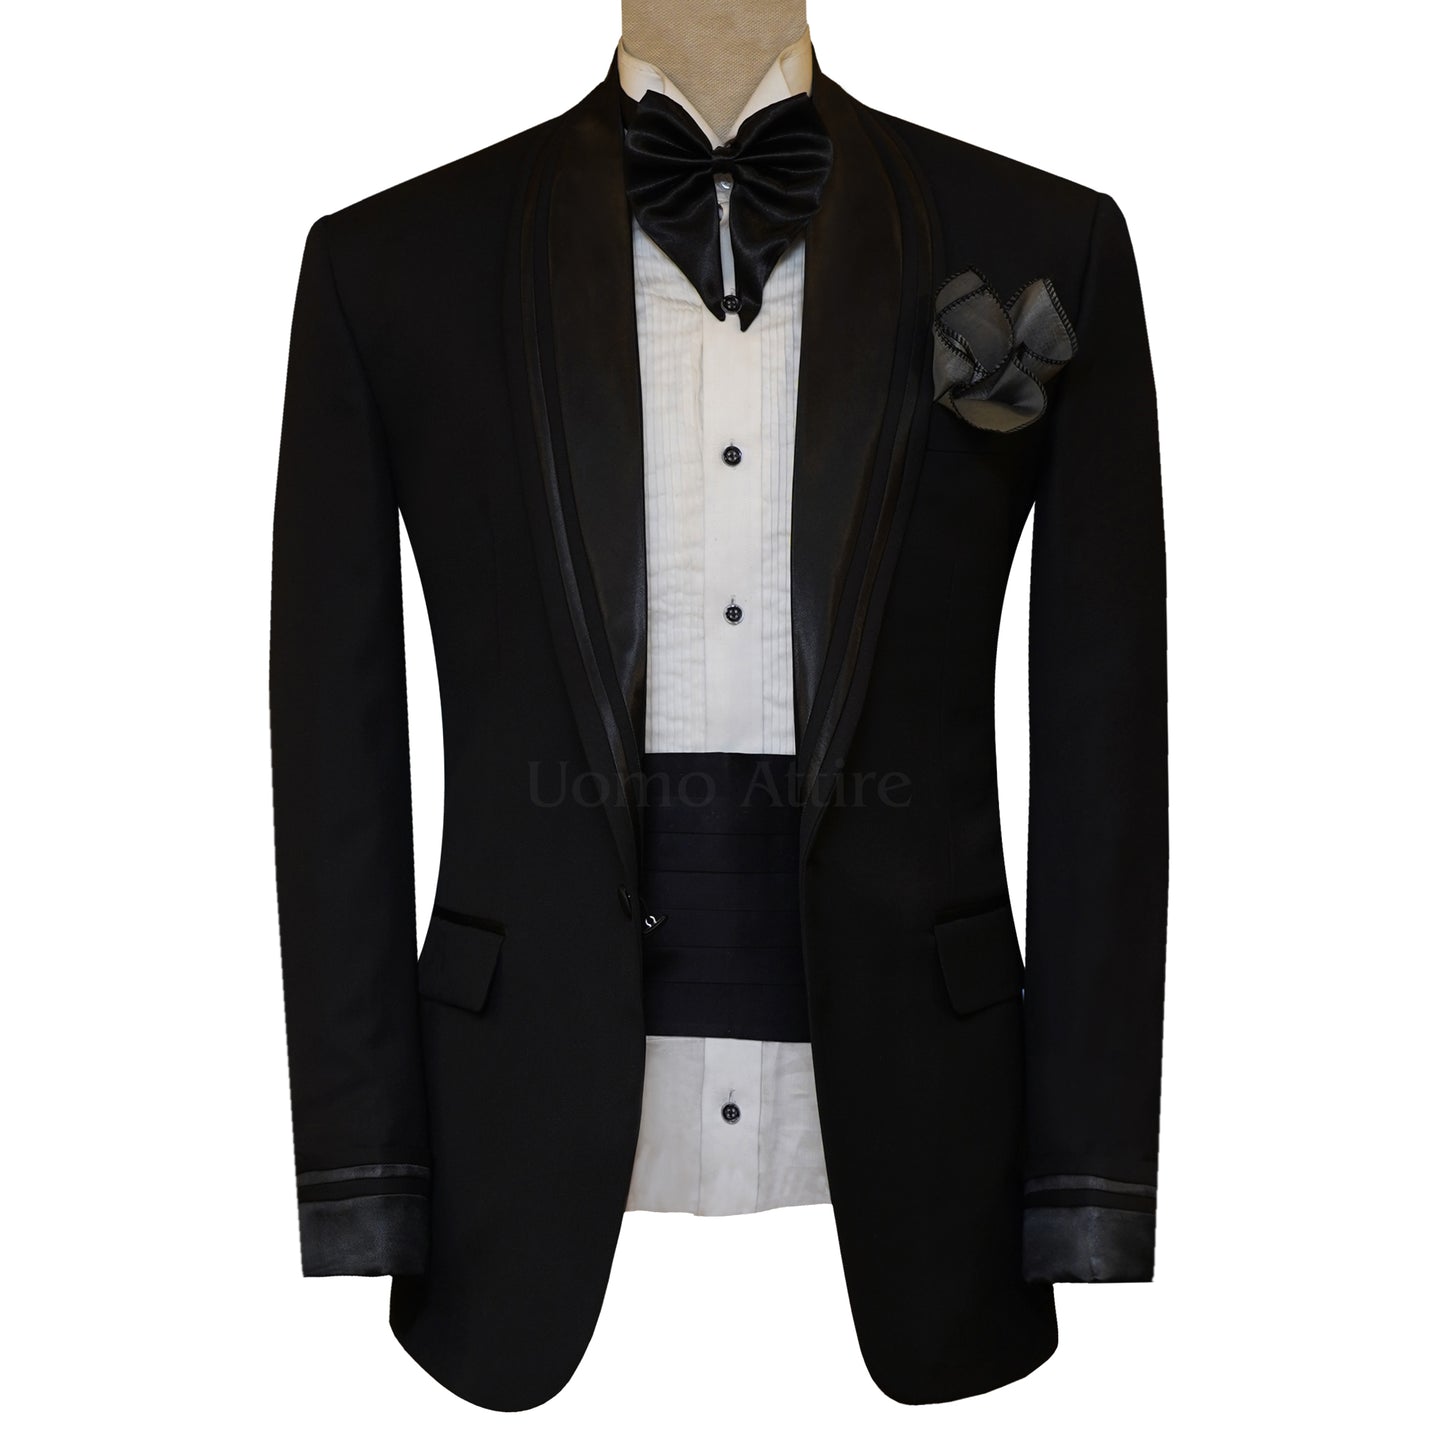 Men's Black Wedding Tuxedo Suit Style For Groom – Uomo Attire